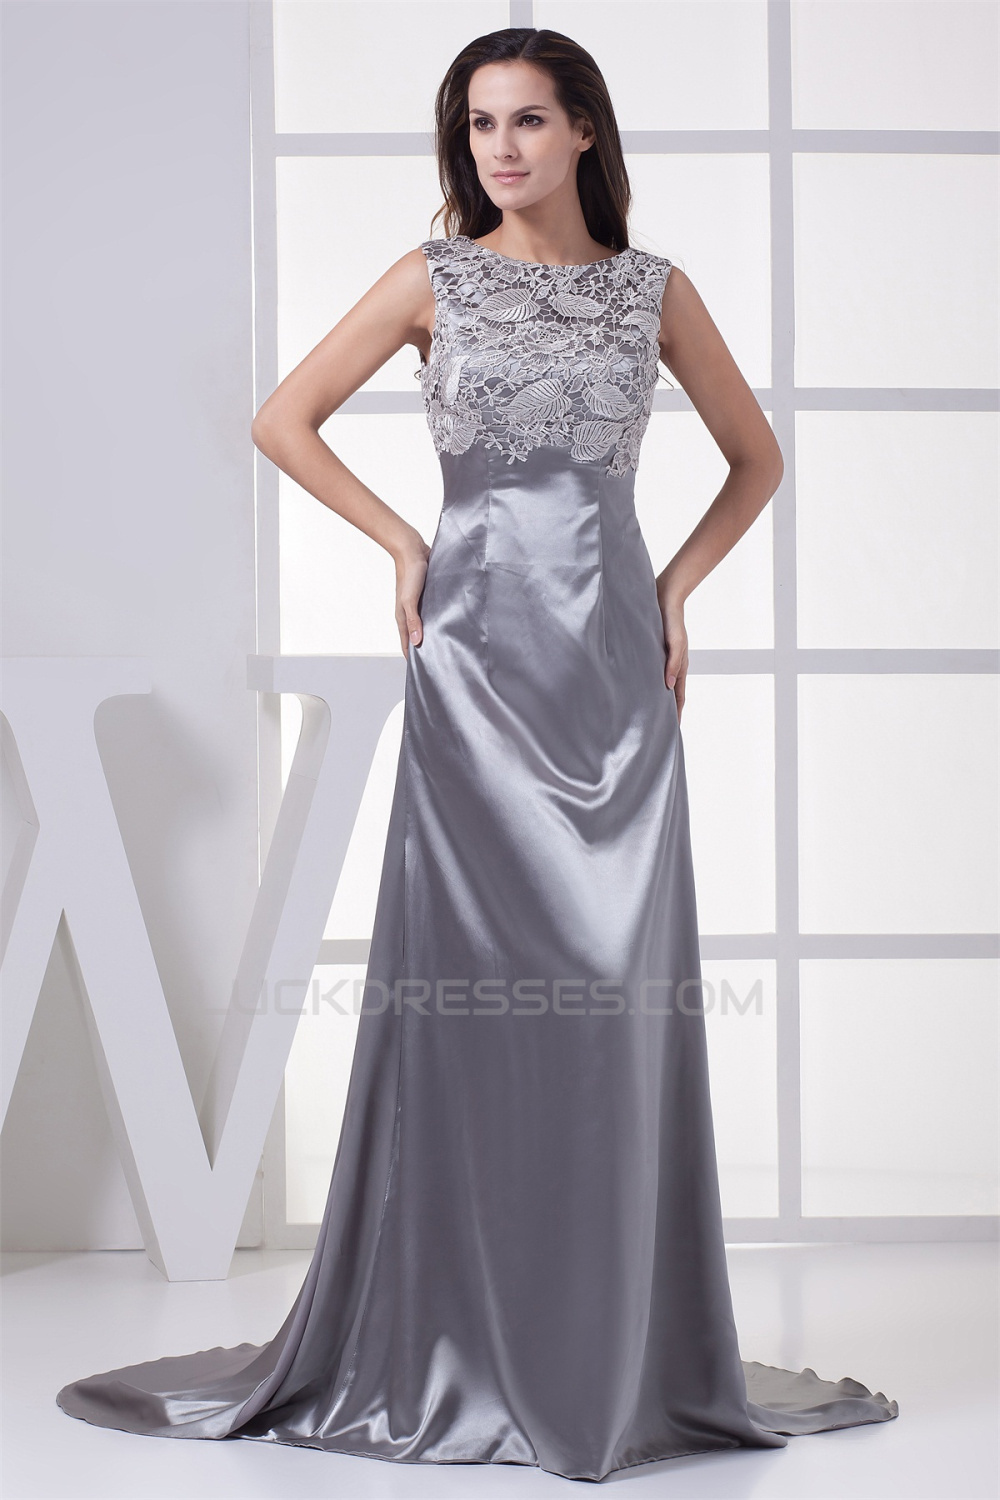 silver silky dress